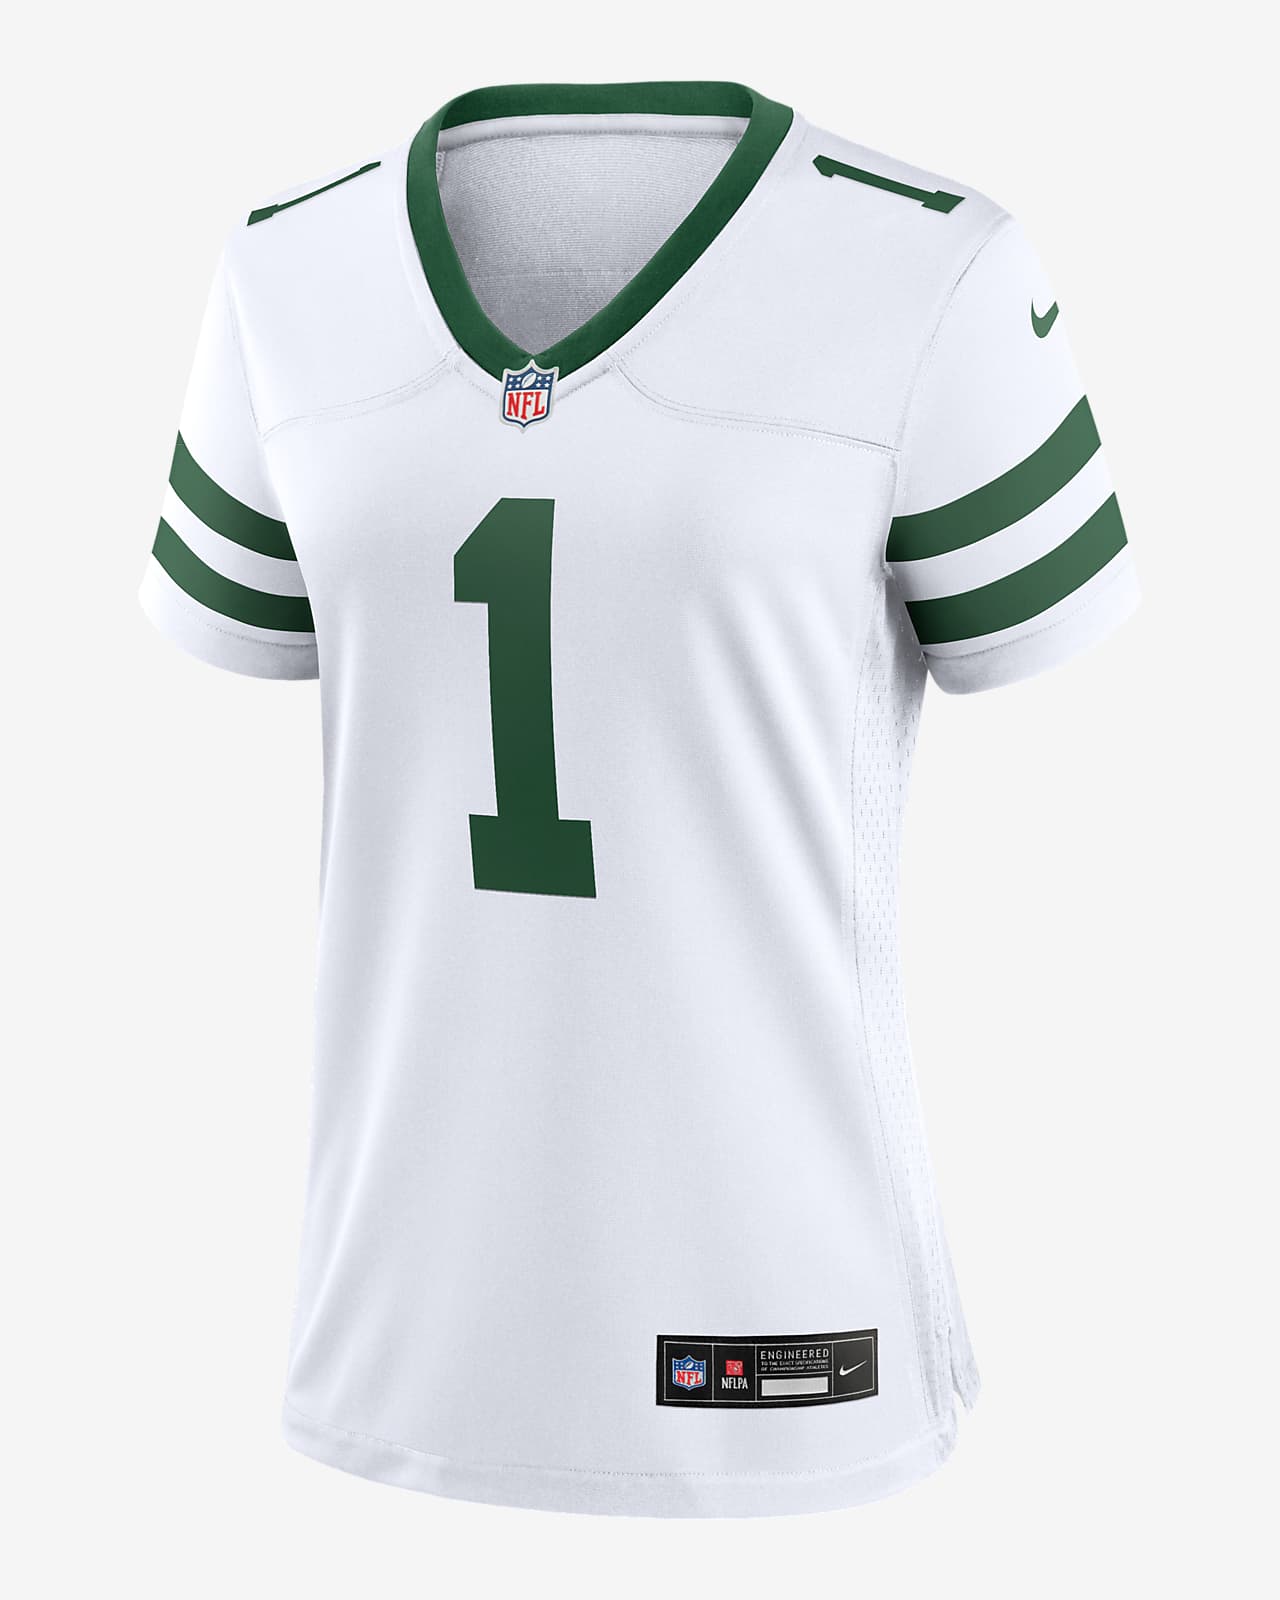 Jersey de fútbol americano Nike de la NFL Game para mujer Sauce Gardner New York Jets